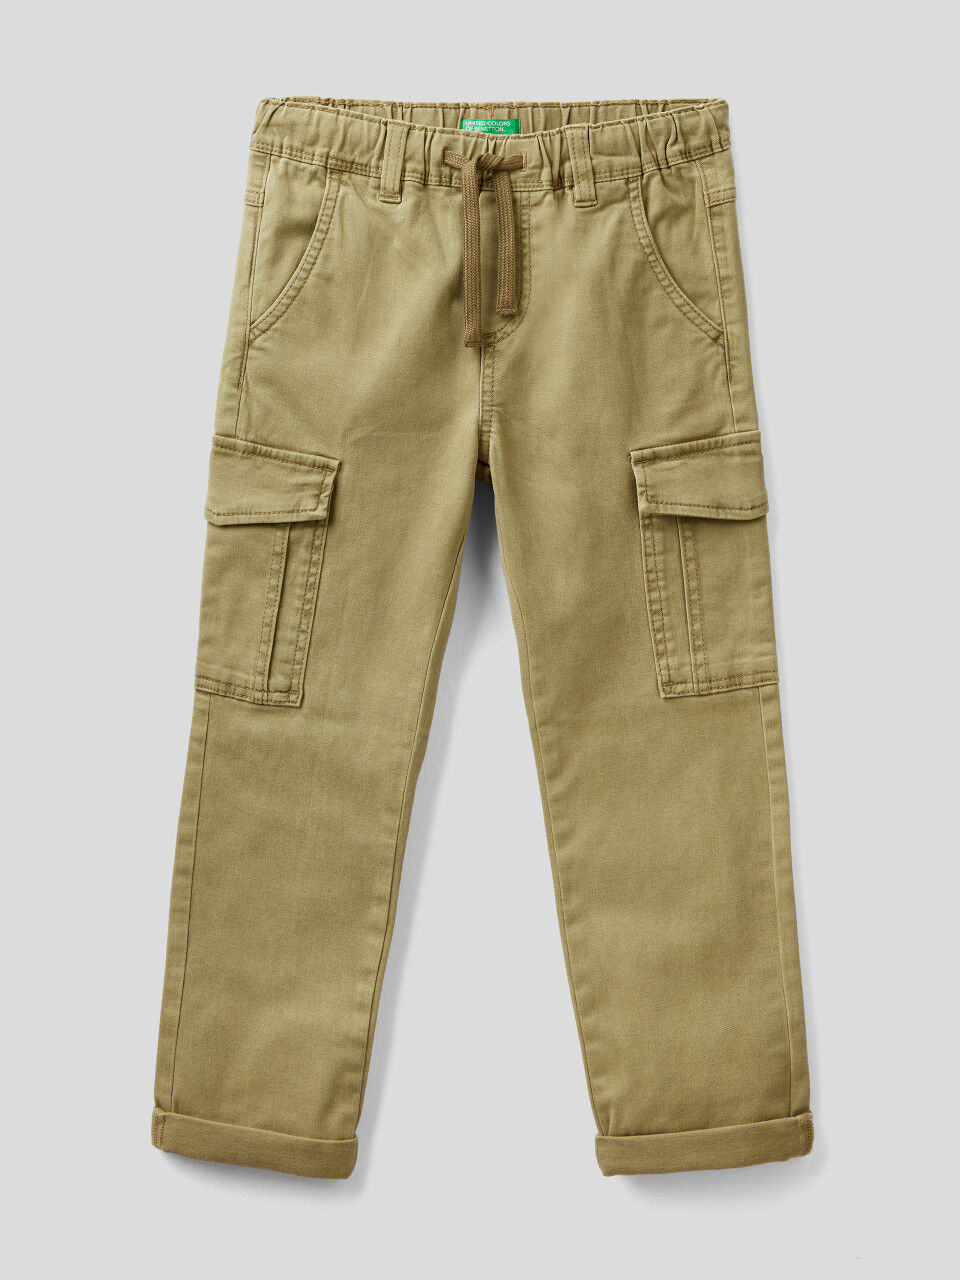 United Colors of Benetton Baby Boys' Pantalone Trouser